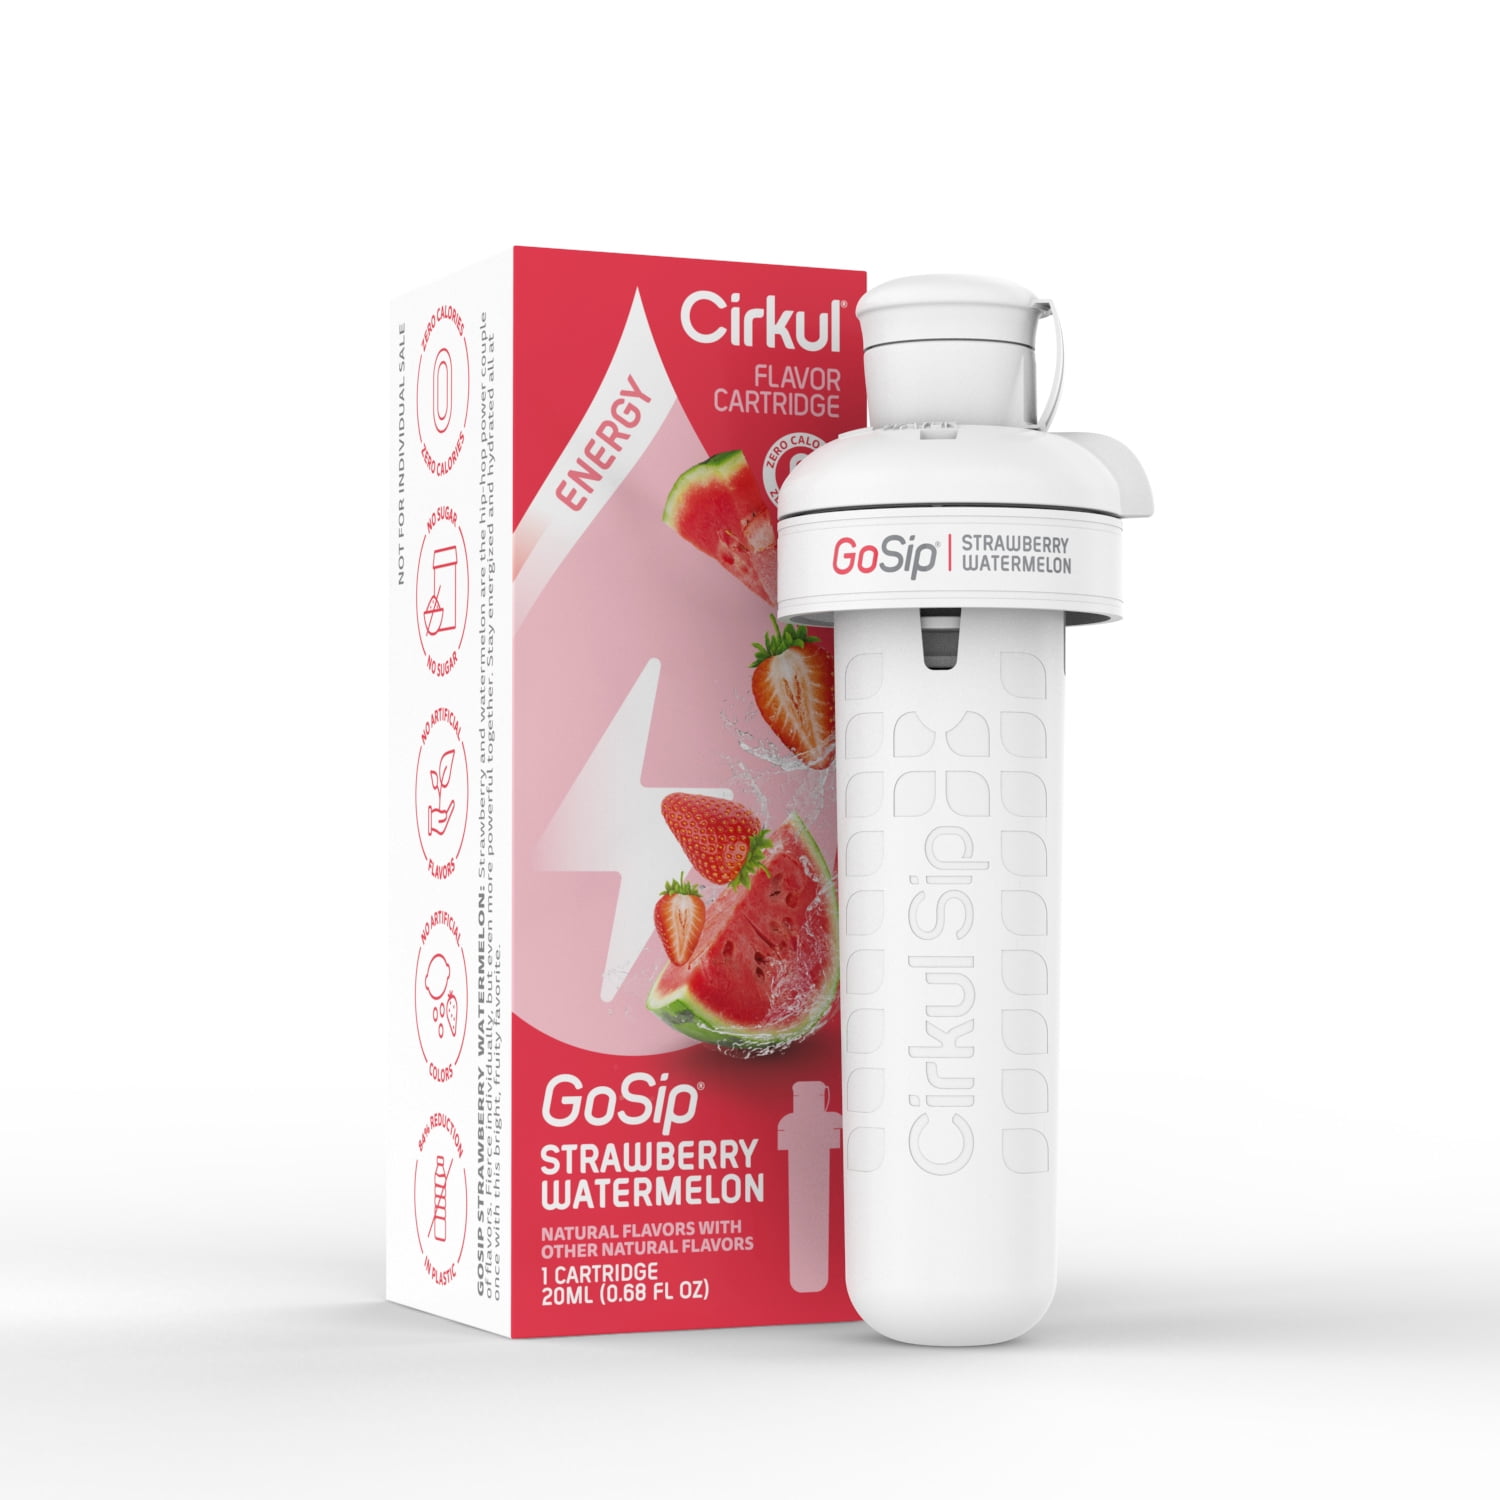 Cirkul GoSip Strawberry Watermelon Flavor Cartridge, Drink Mix, 1-Pack